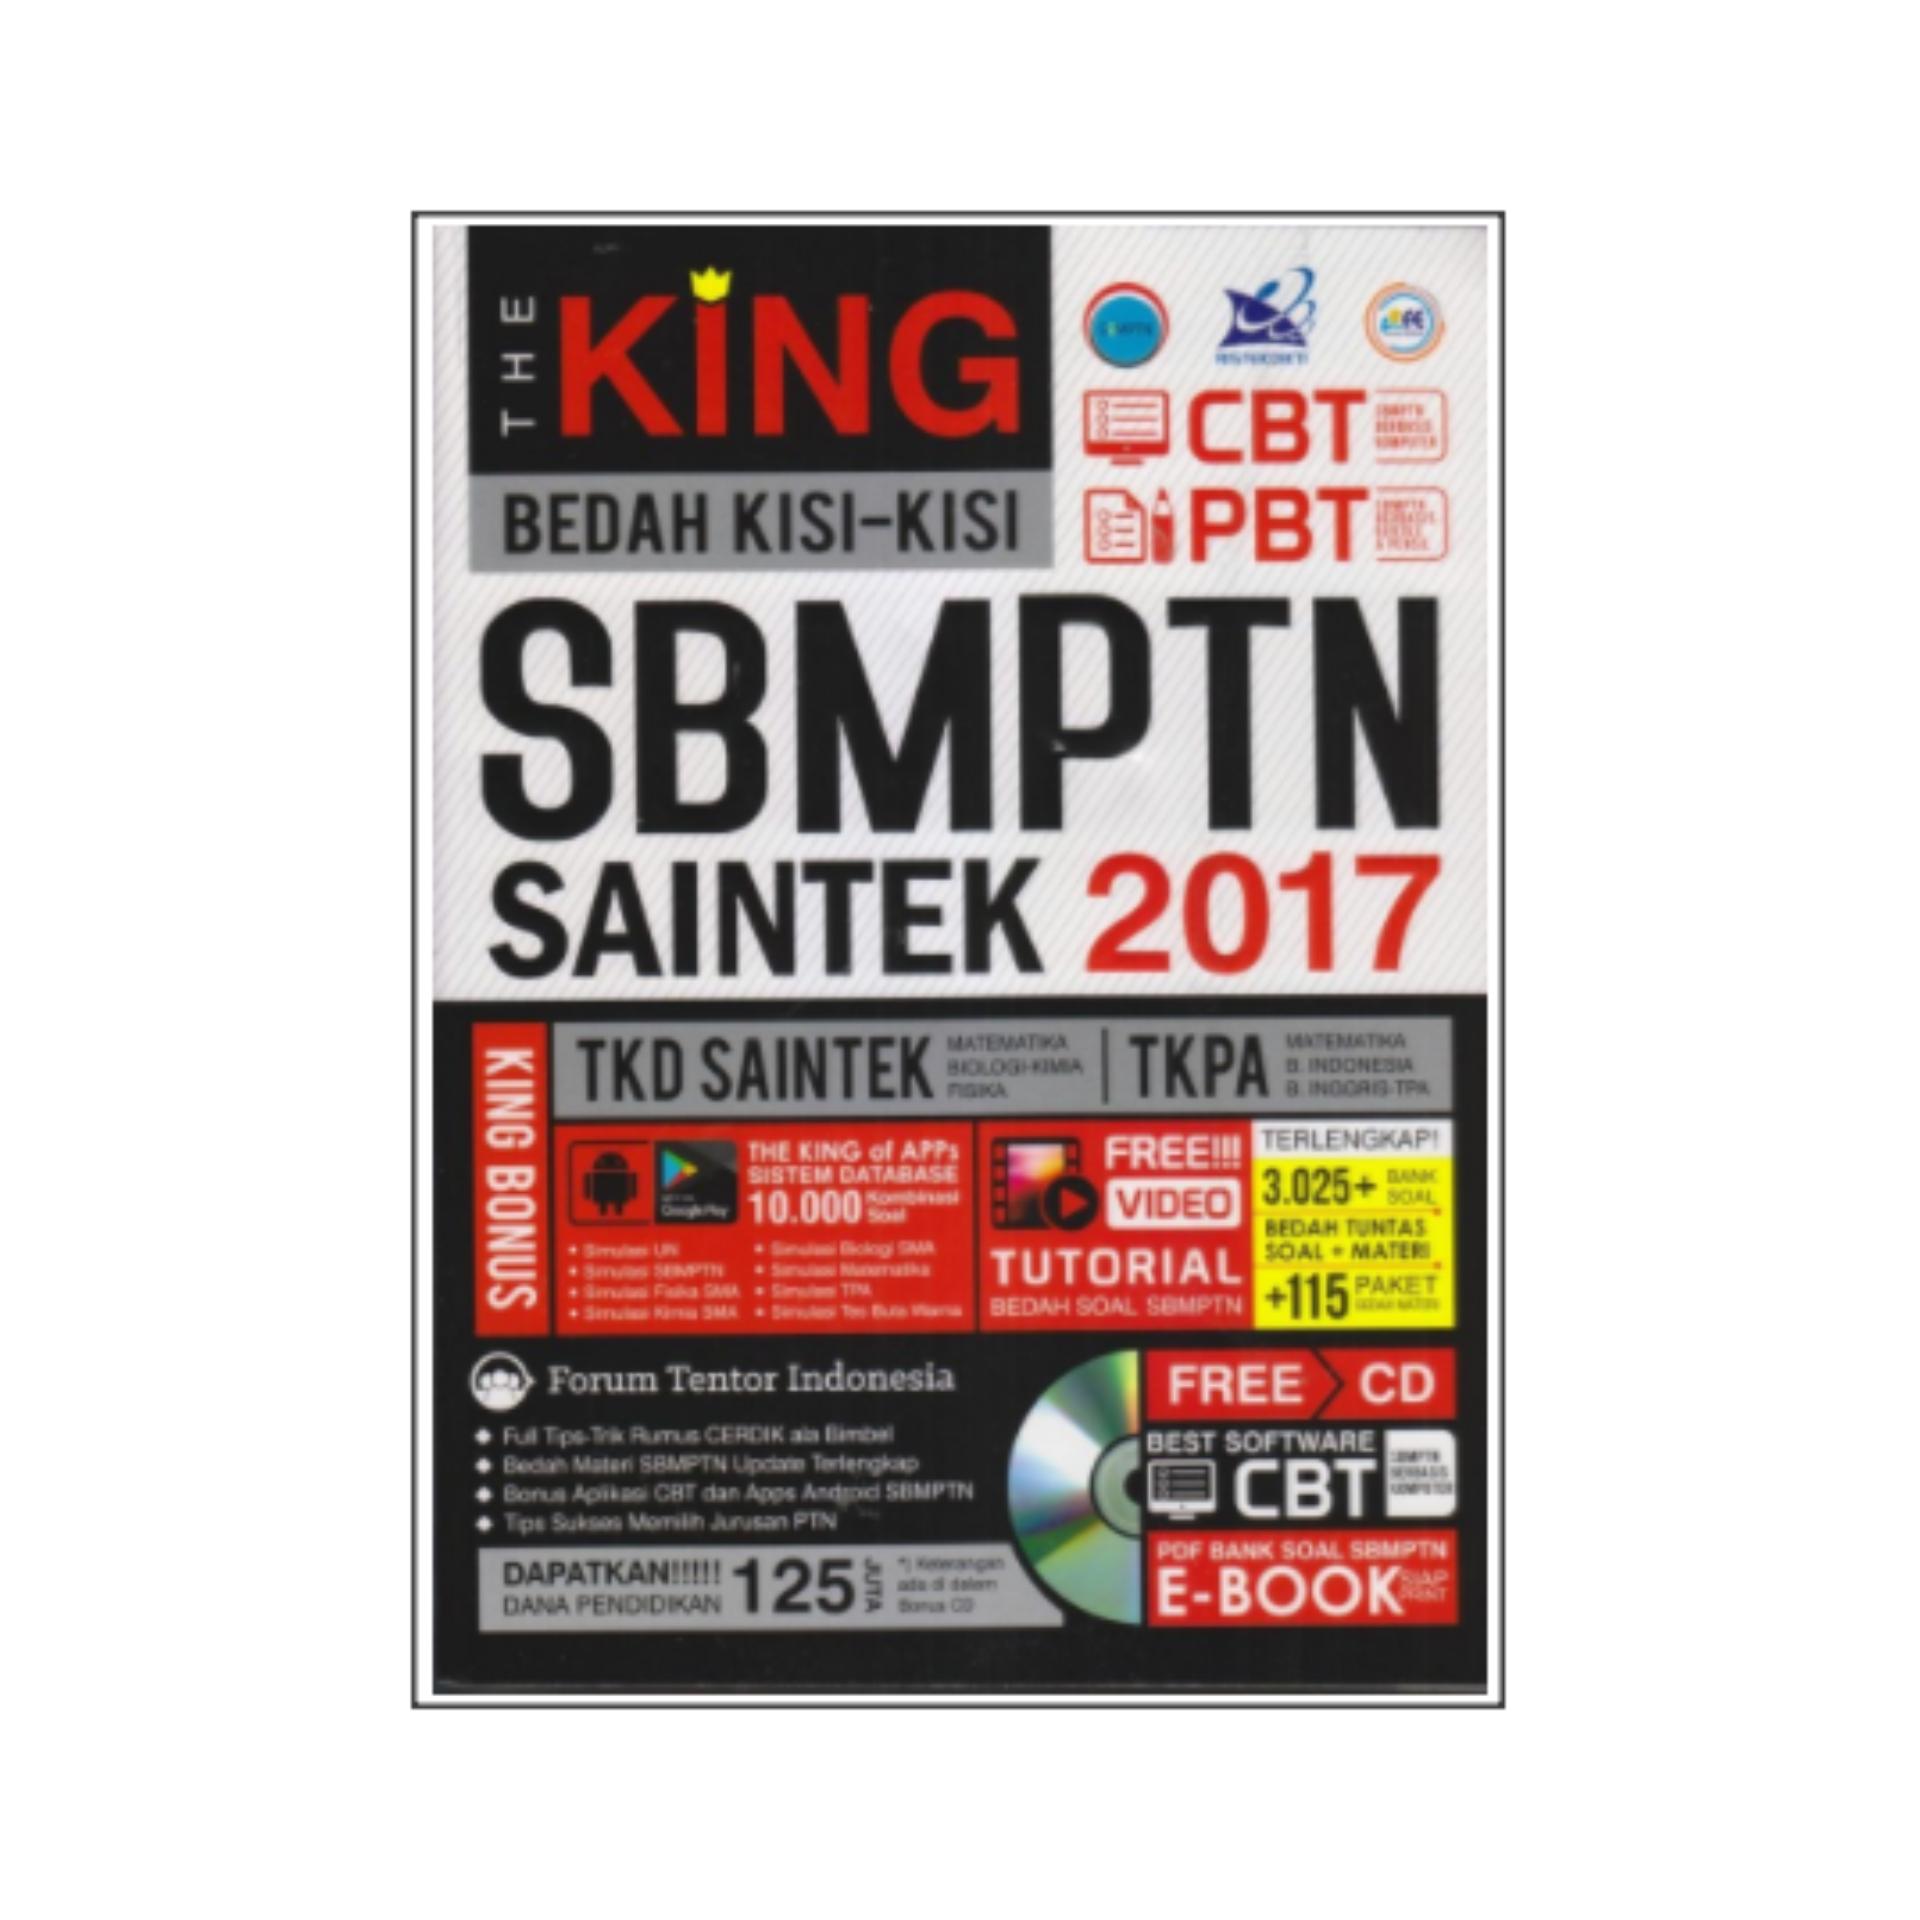 Bedah Kisi kisi Sbmptn Saintek 2017 The King